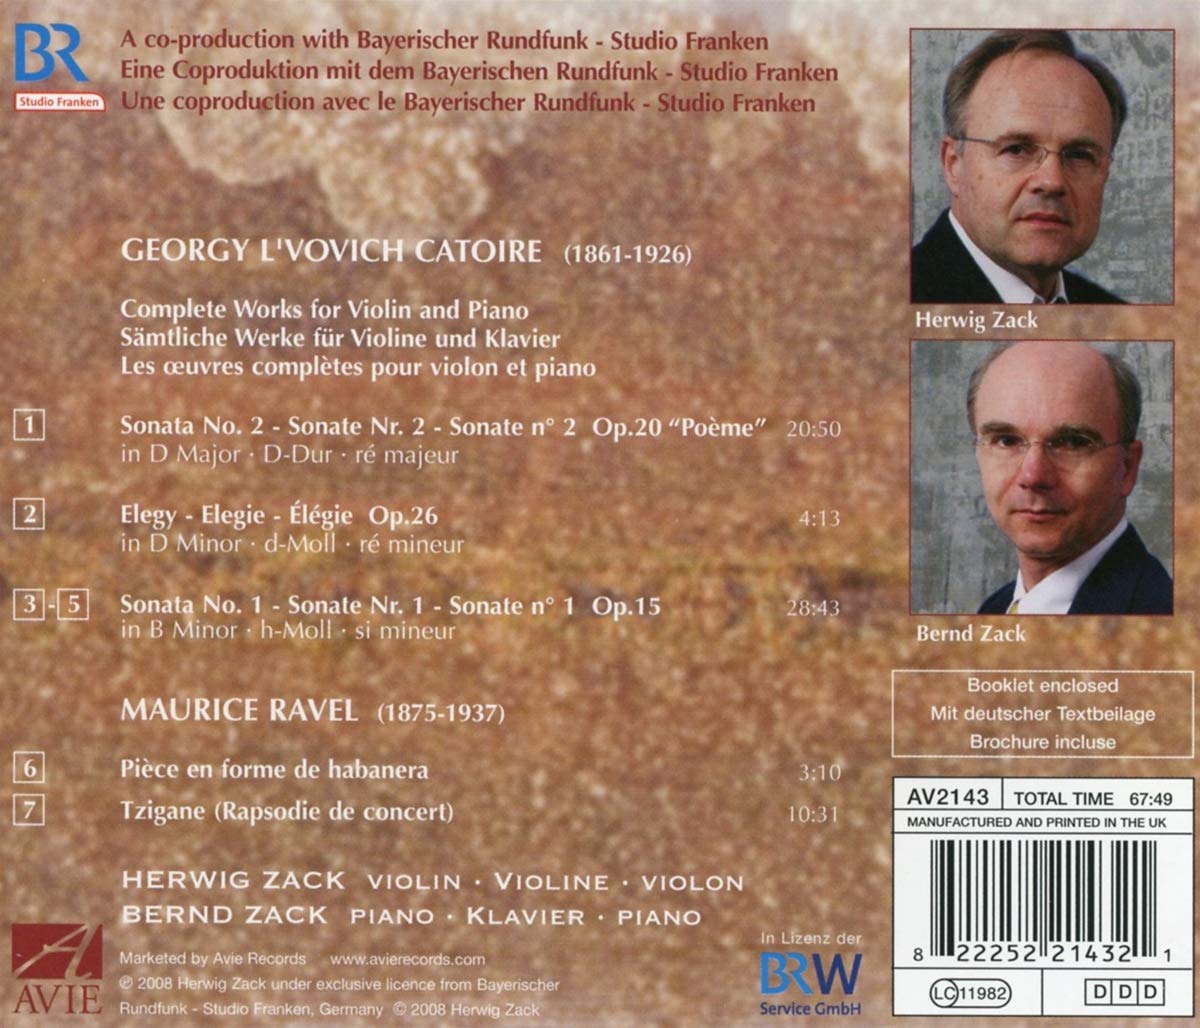 Catoire: Complete Works for Violin and Piano; Ravel: Tzigane, Piece en forme de habanera - Herwig Zack, Bernd Zack